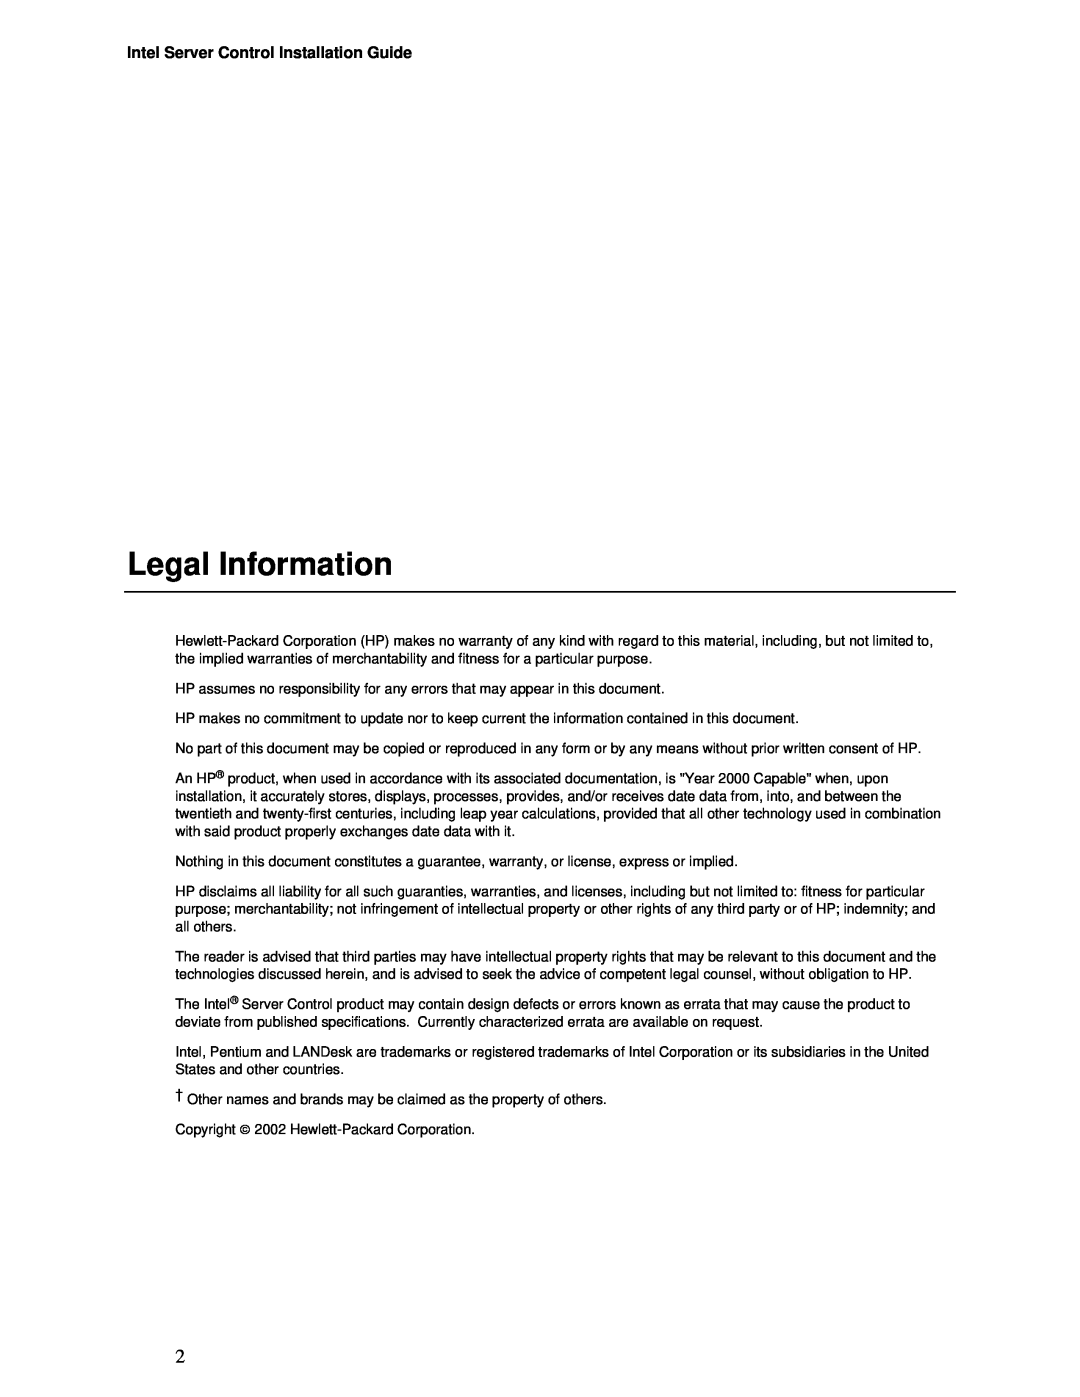 Intel cc3300, cc2300 manual Legal Information, Intel Server Control Installation Guide 